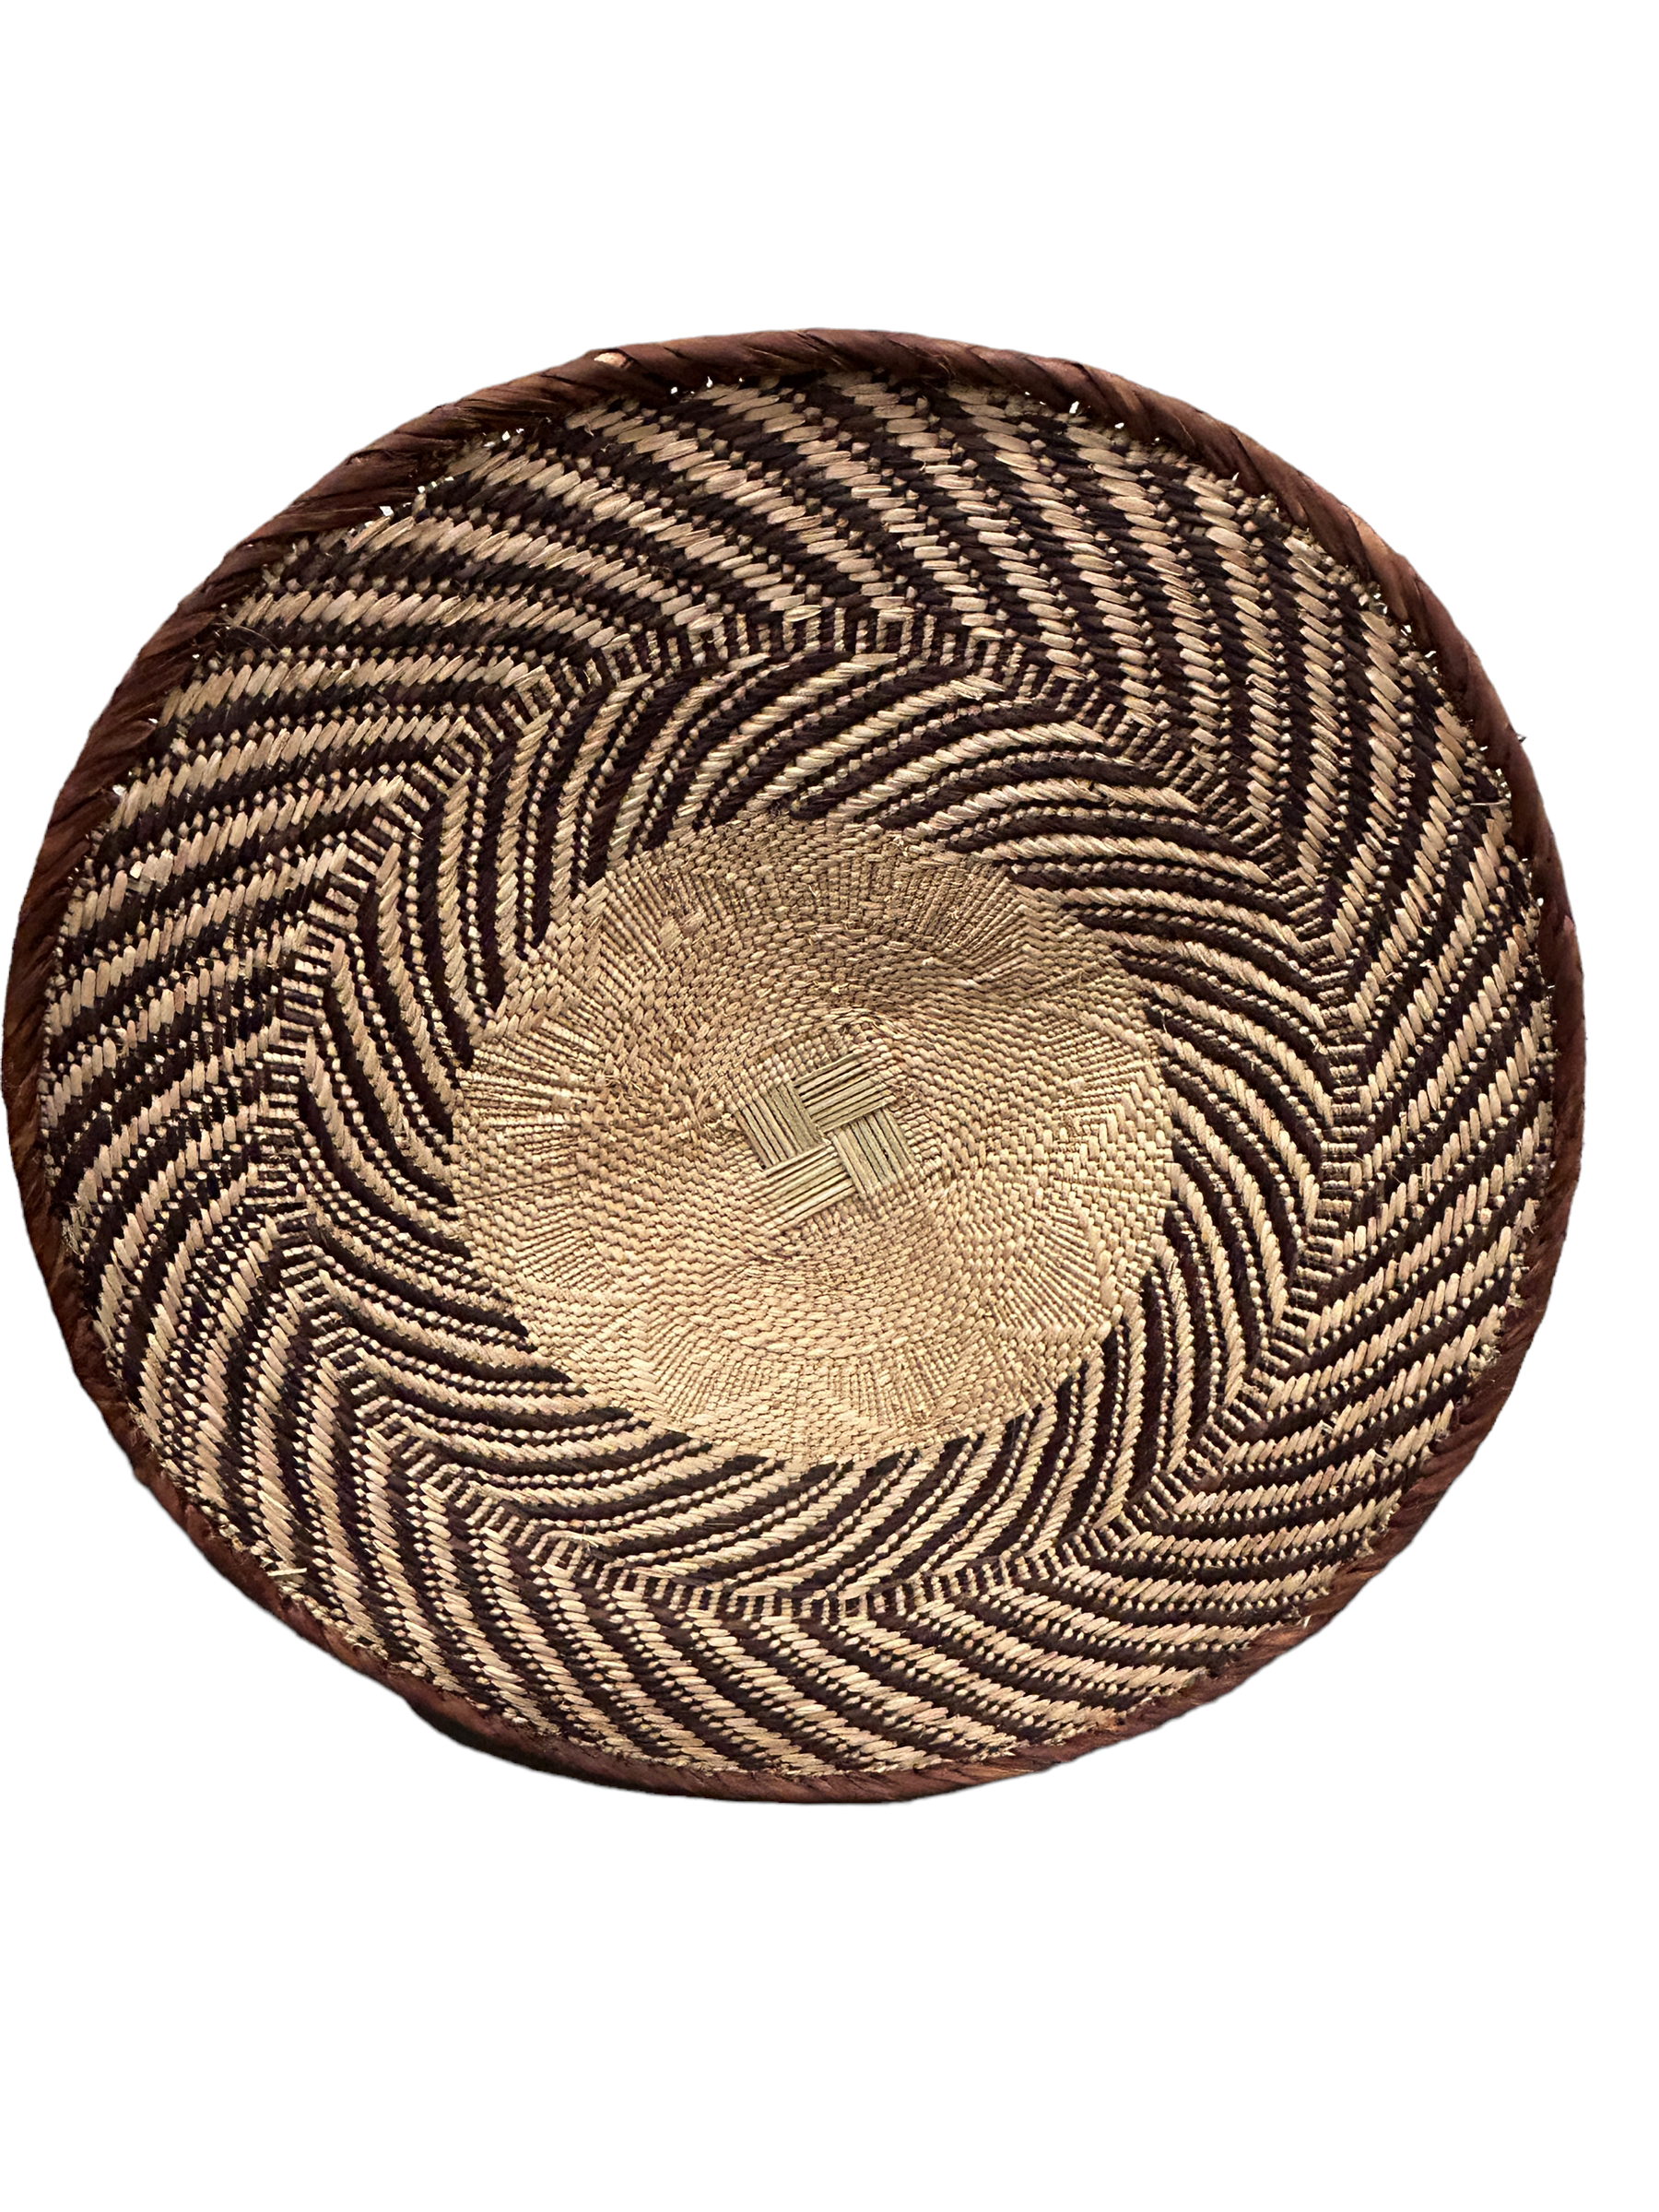 botanicalboysuk Tonga Basket Natural (50-13)